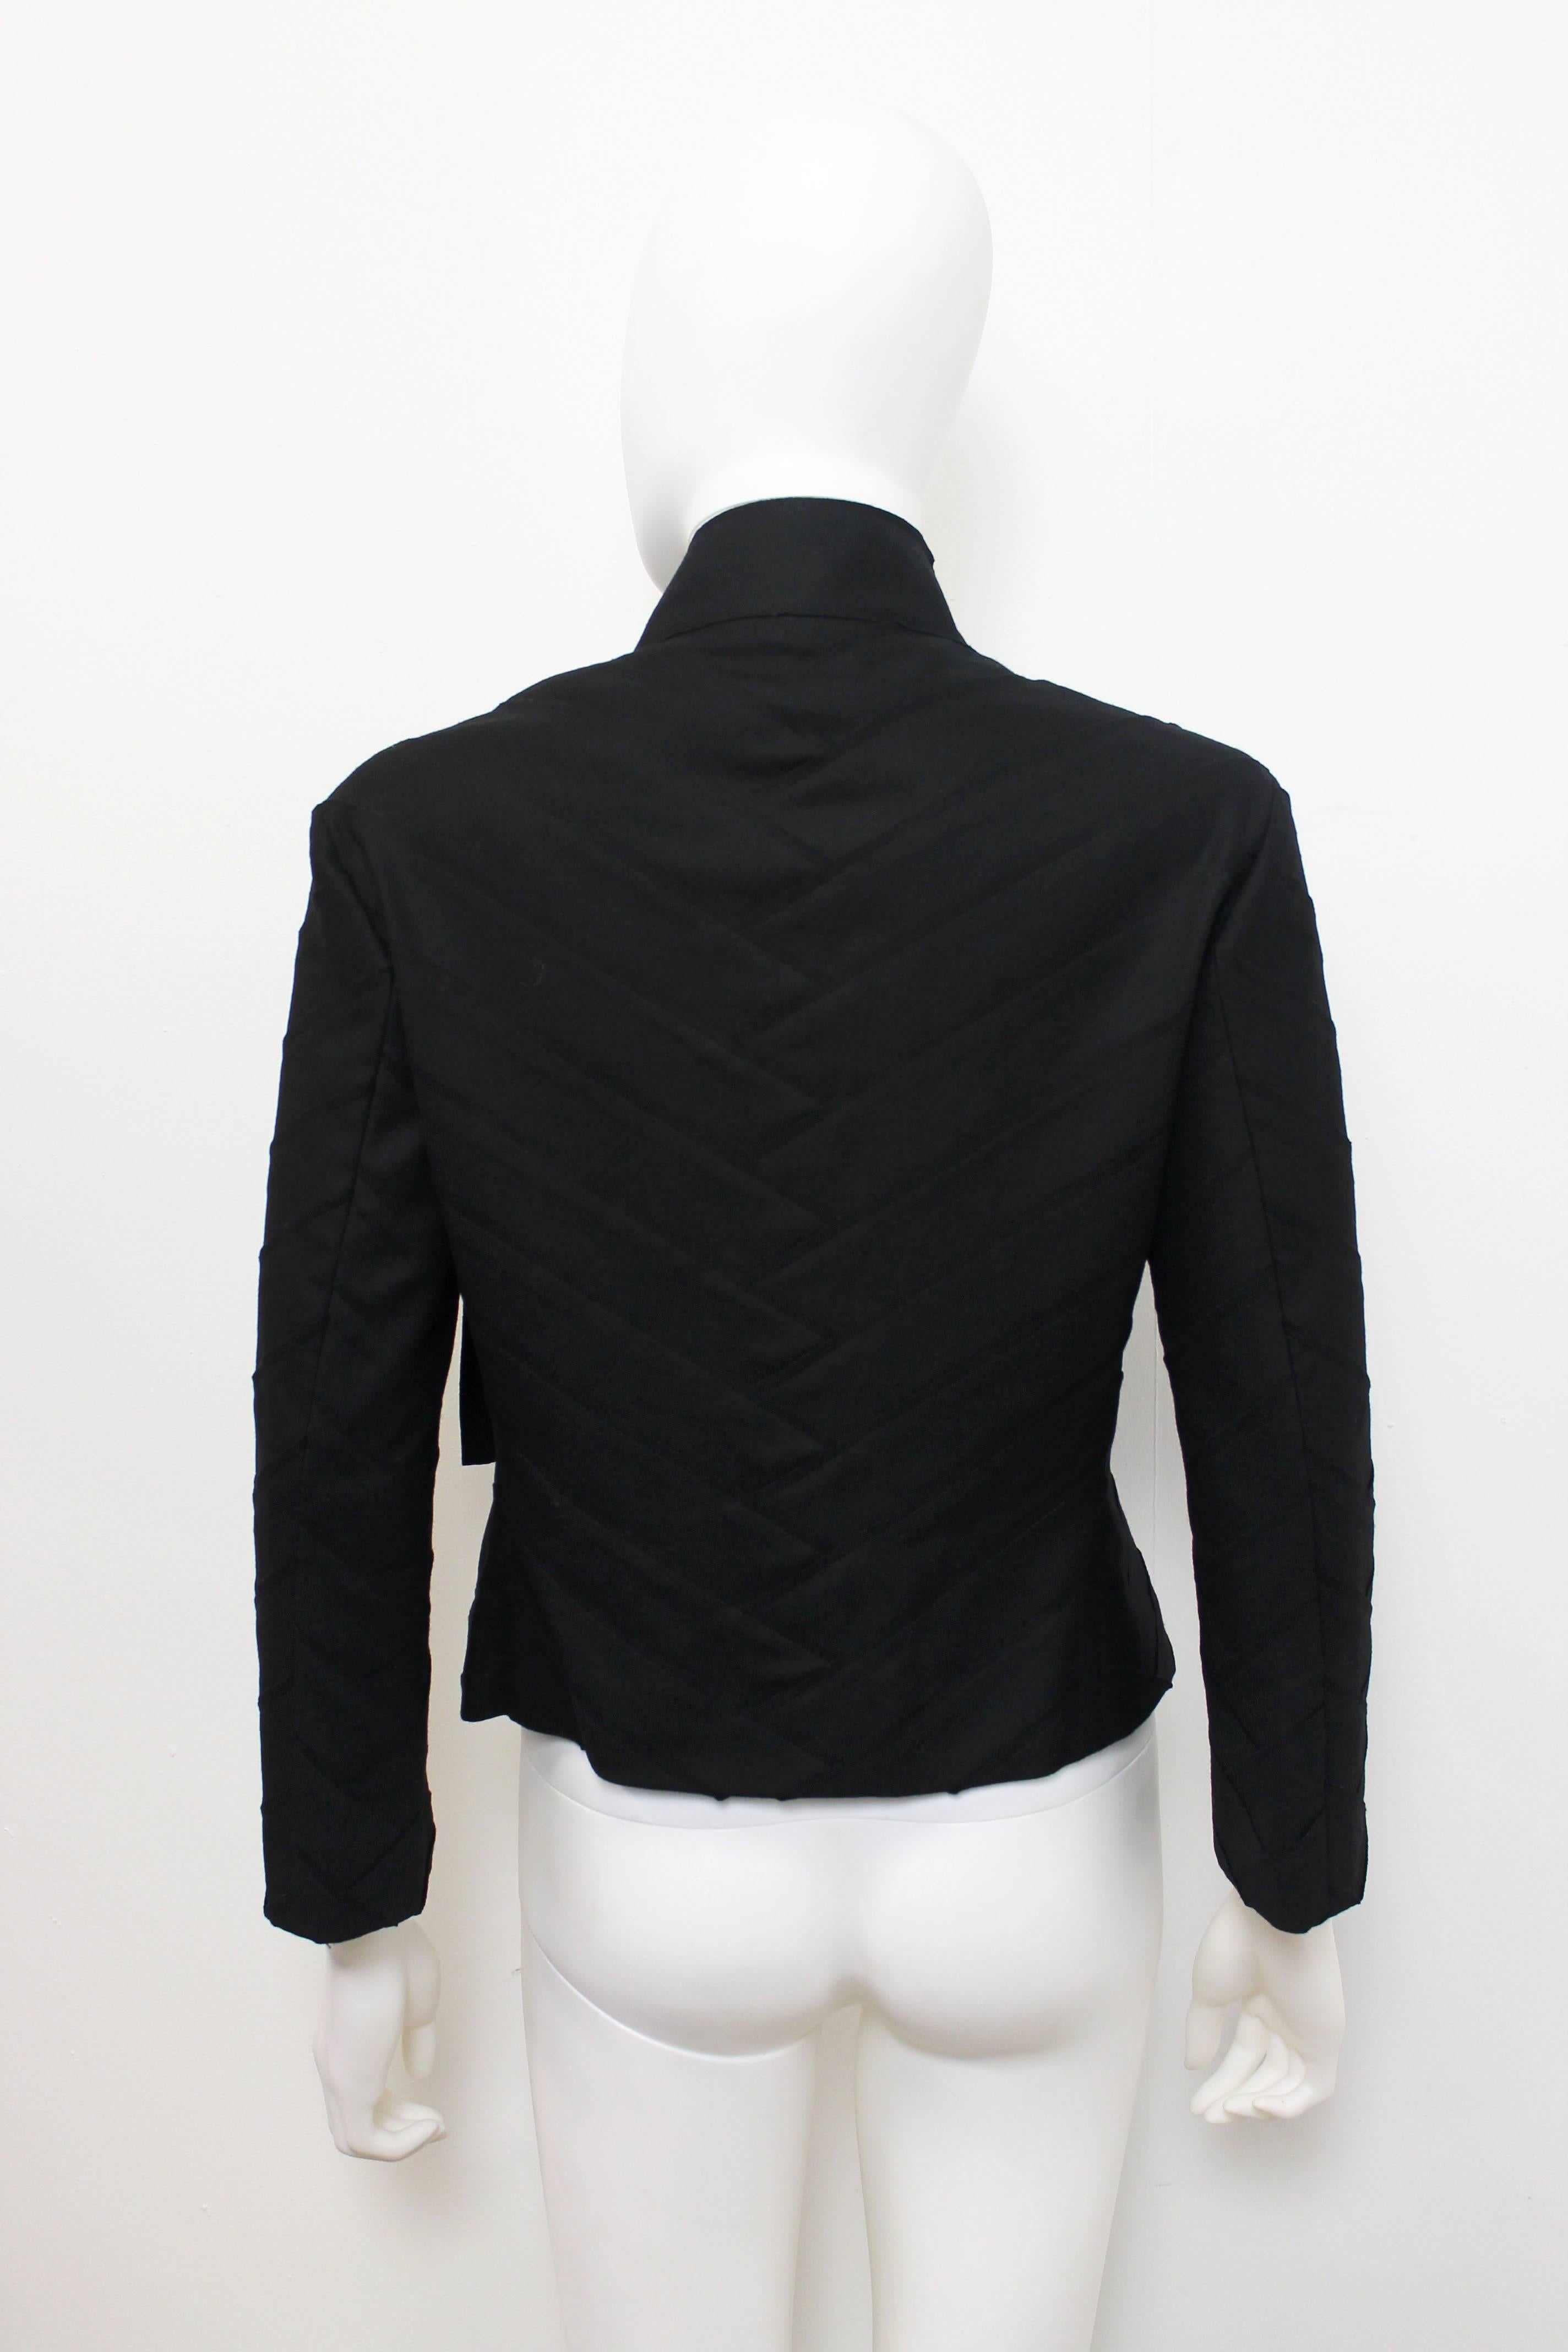 Black Issey Miyake Chevron Panel Fitted Jacket With Asymmetric Tie Neckline c.2000